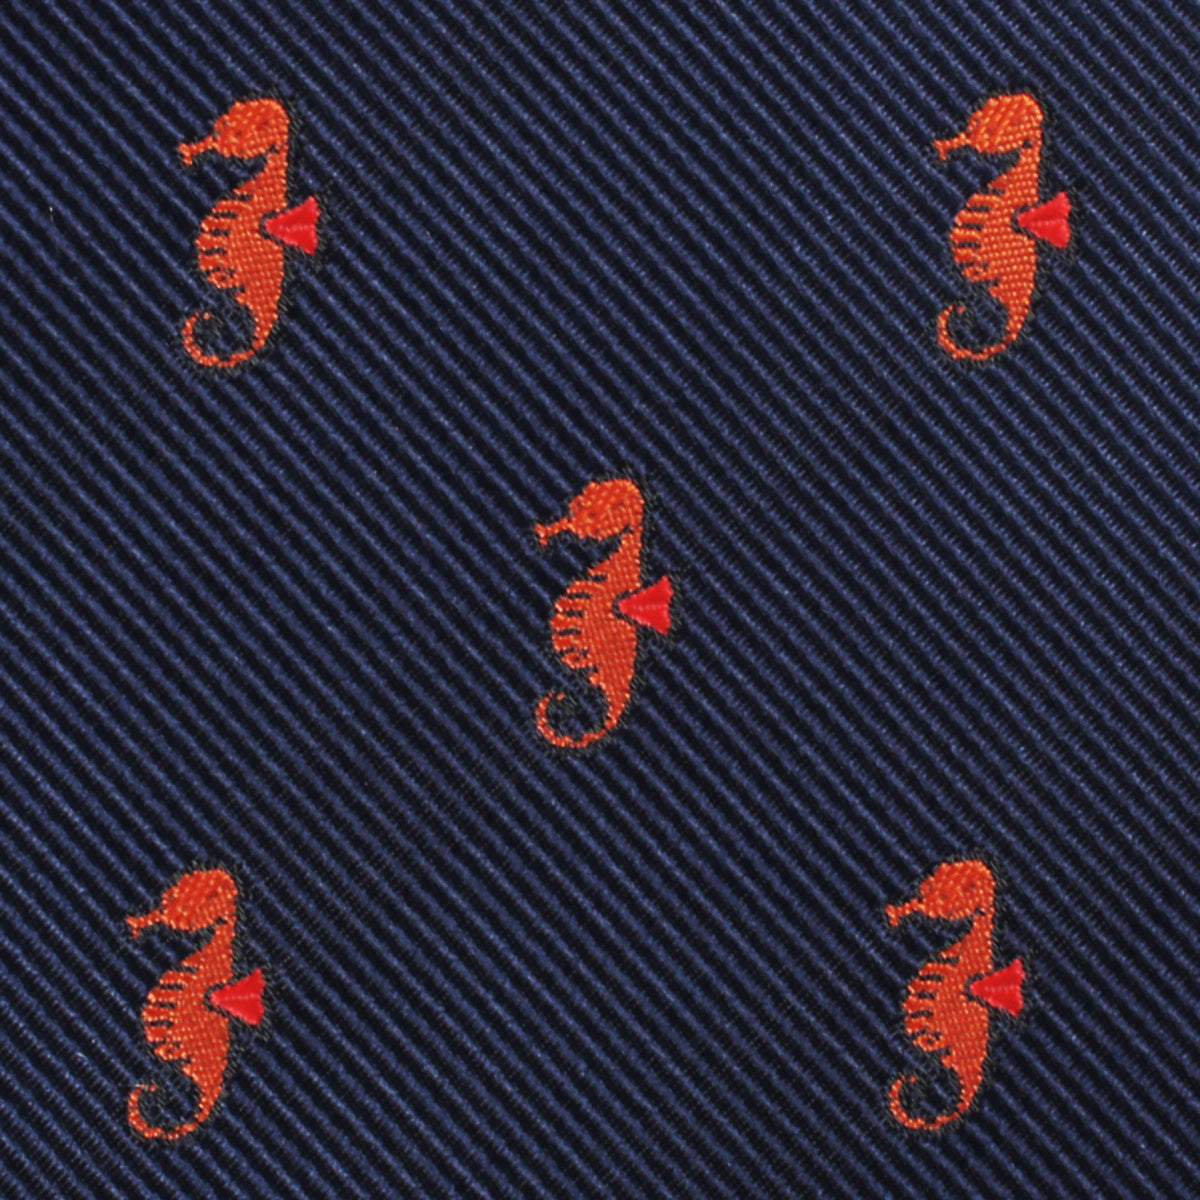 Tropical Seahorse Pocket Square Fabric